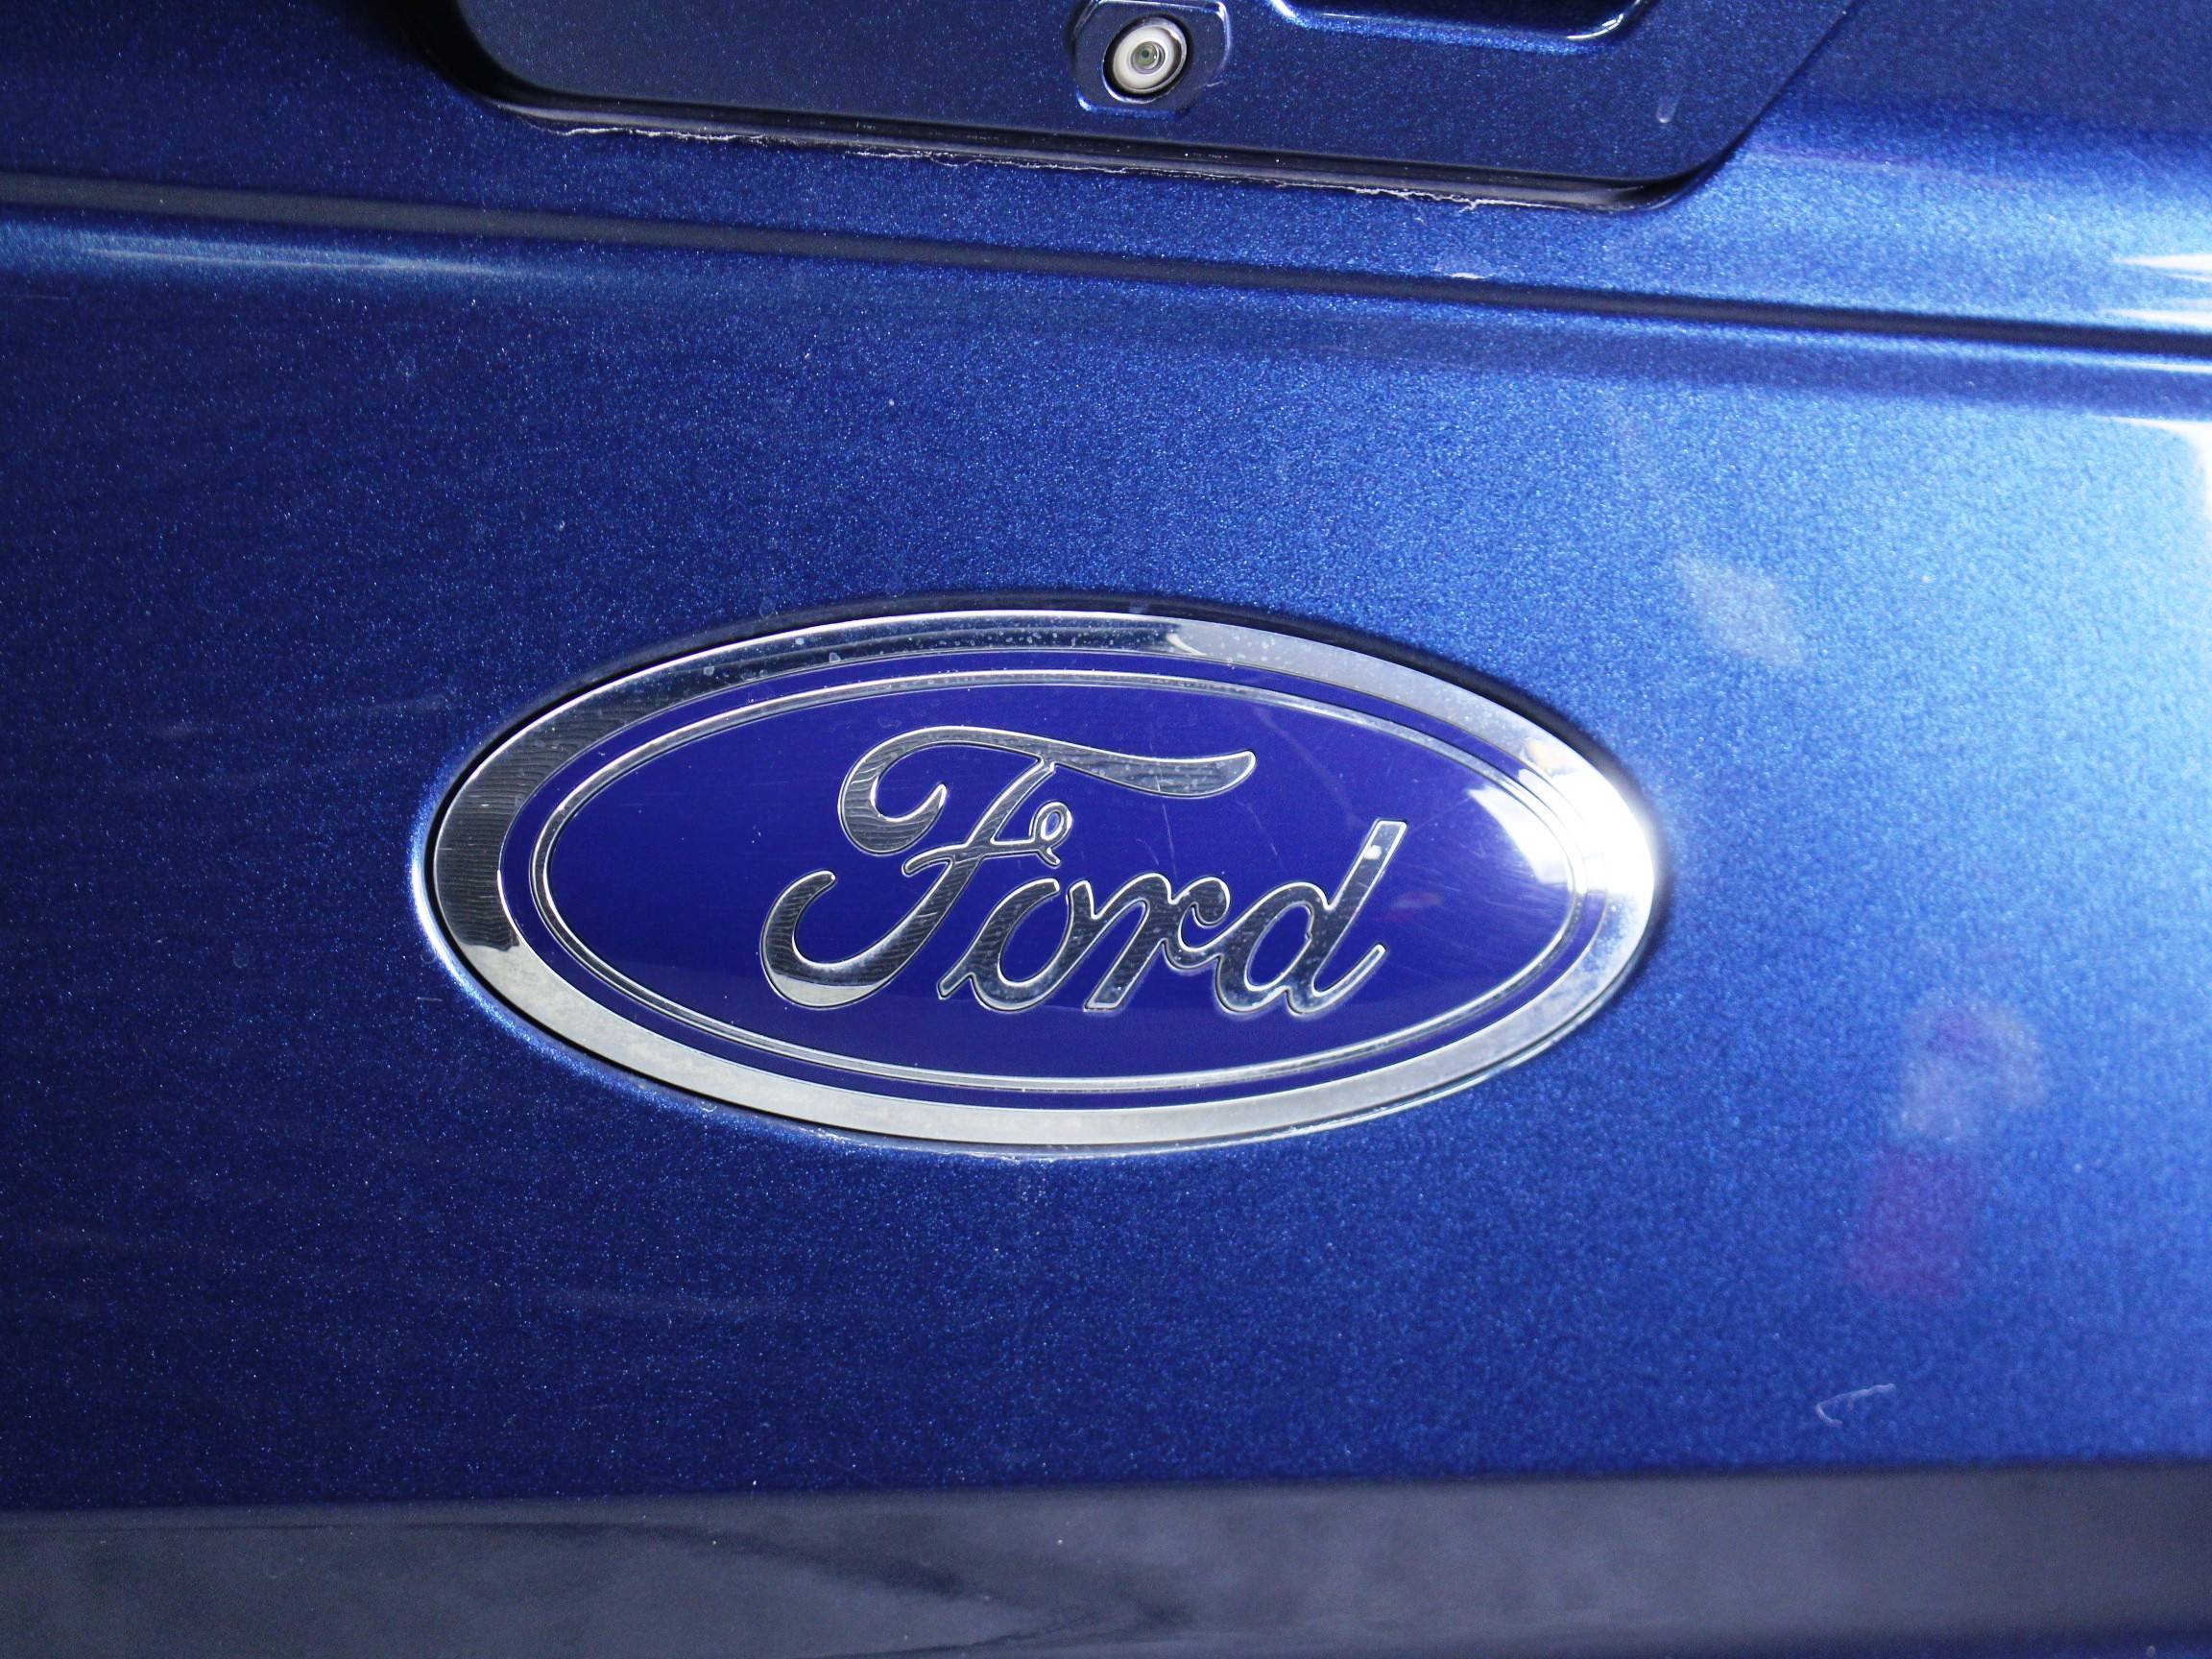 Florida Fine Cars - Used FORD F 150 2015 MIAMI Lariat Super Cab